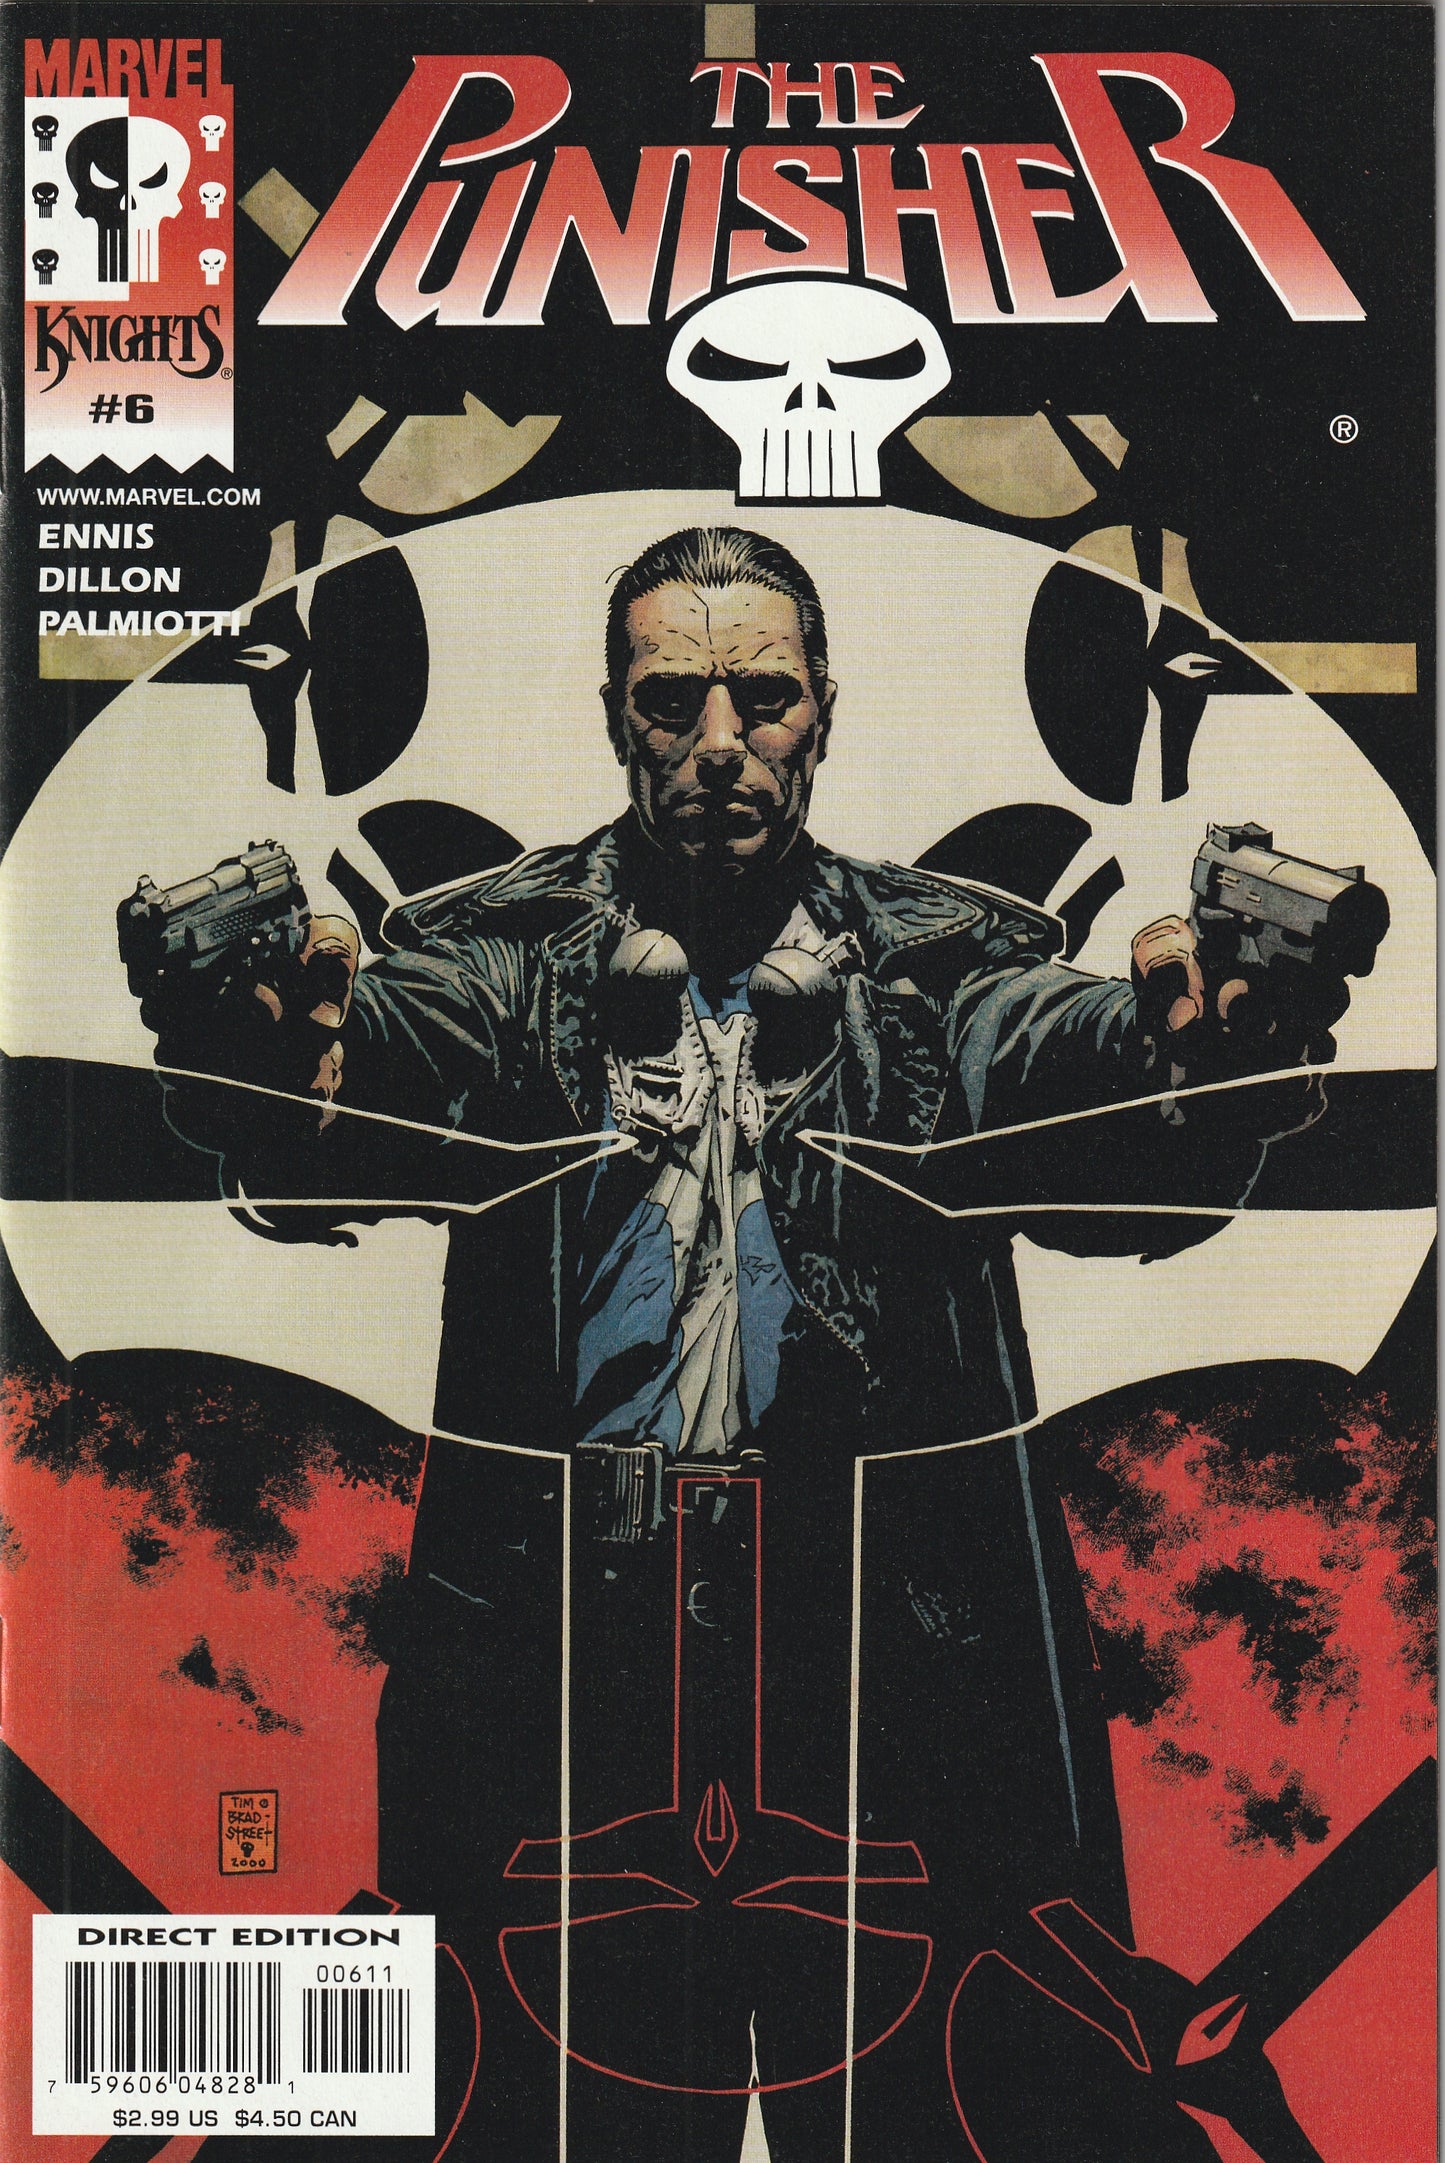 The Punisher #6 (Marvel Knights Vol 3, 2000) - Garth Ennis, Steve Dillon, Jimmy Palmiotti